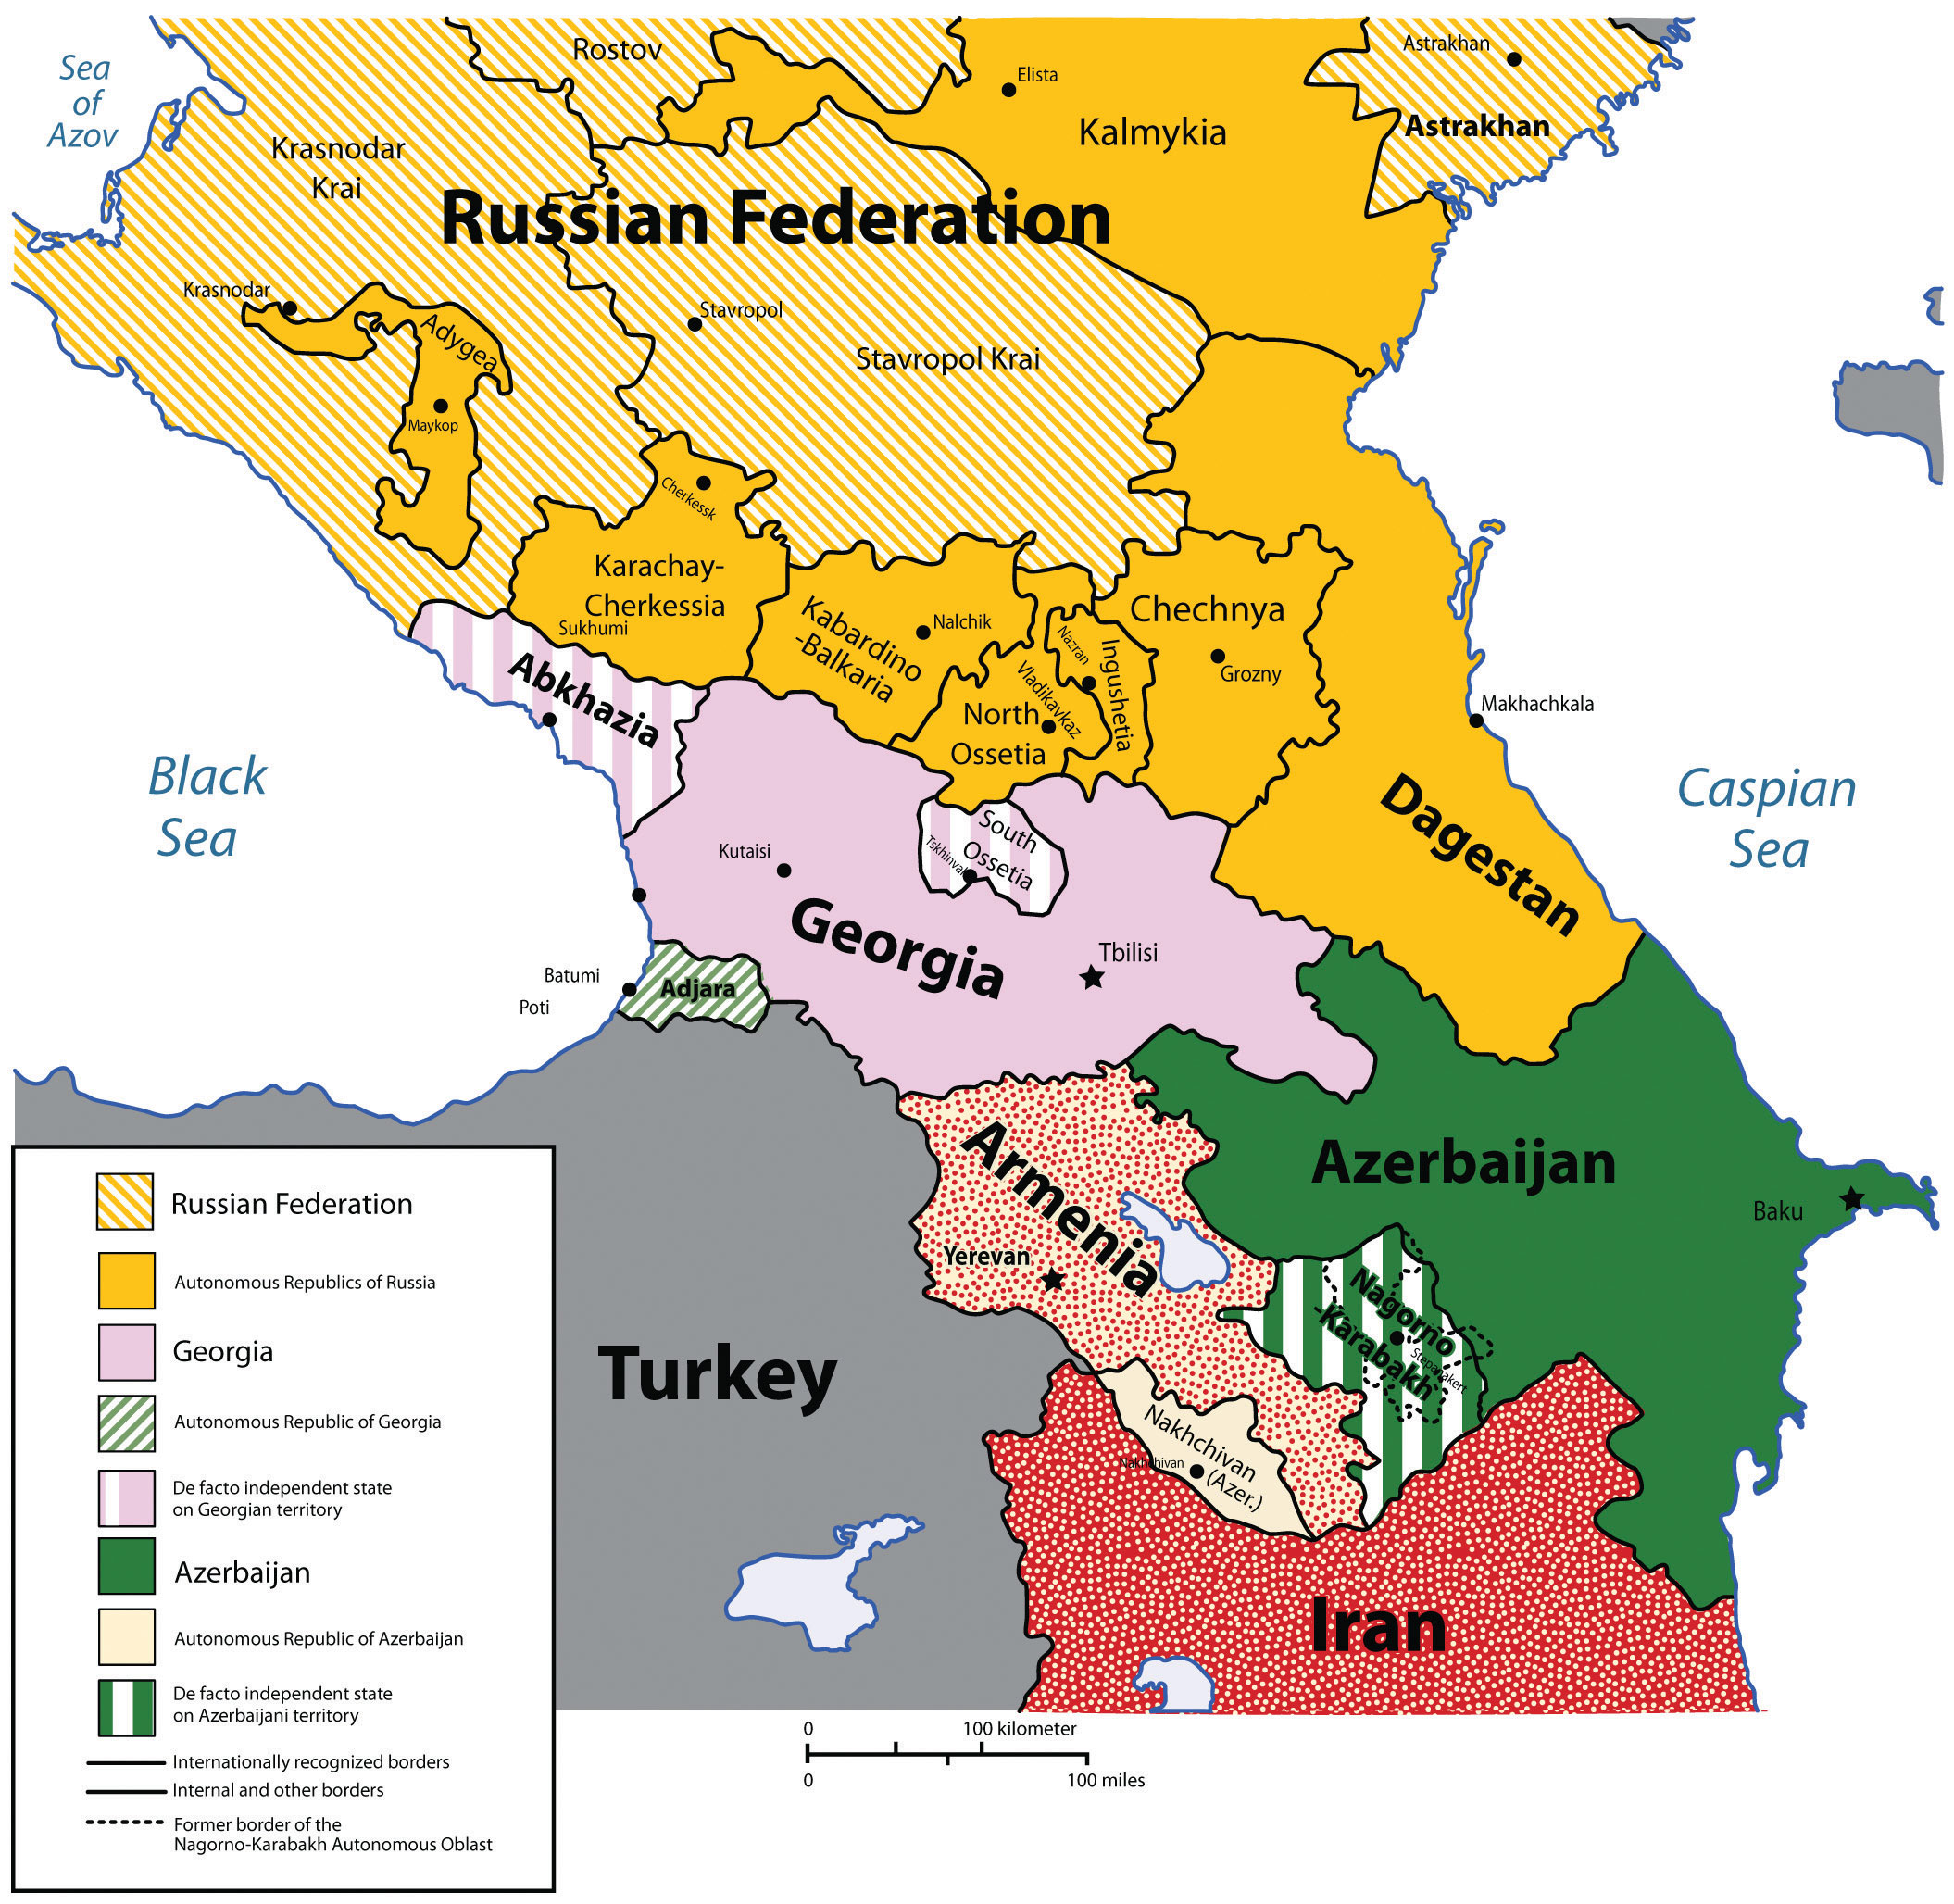 Geography of Armenia - Wikipedia